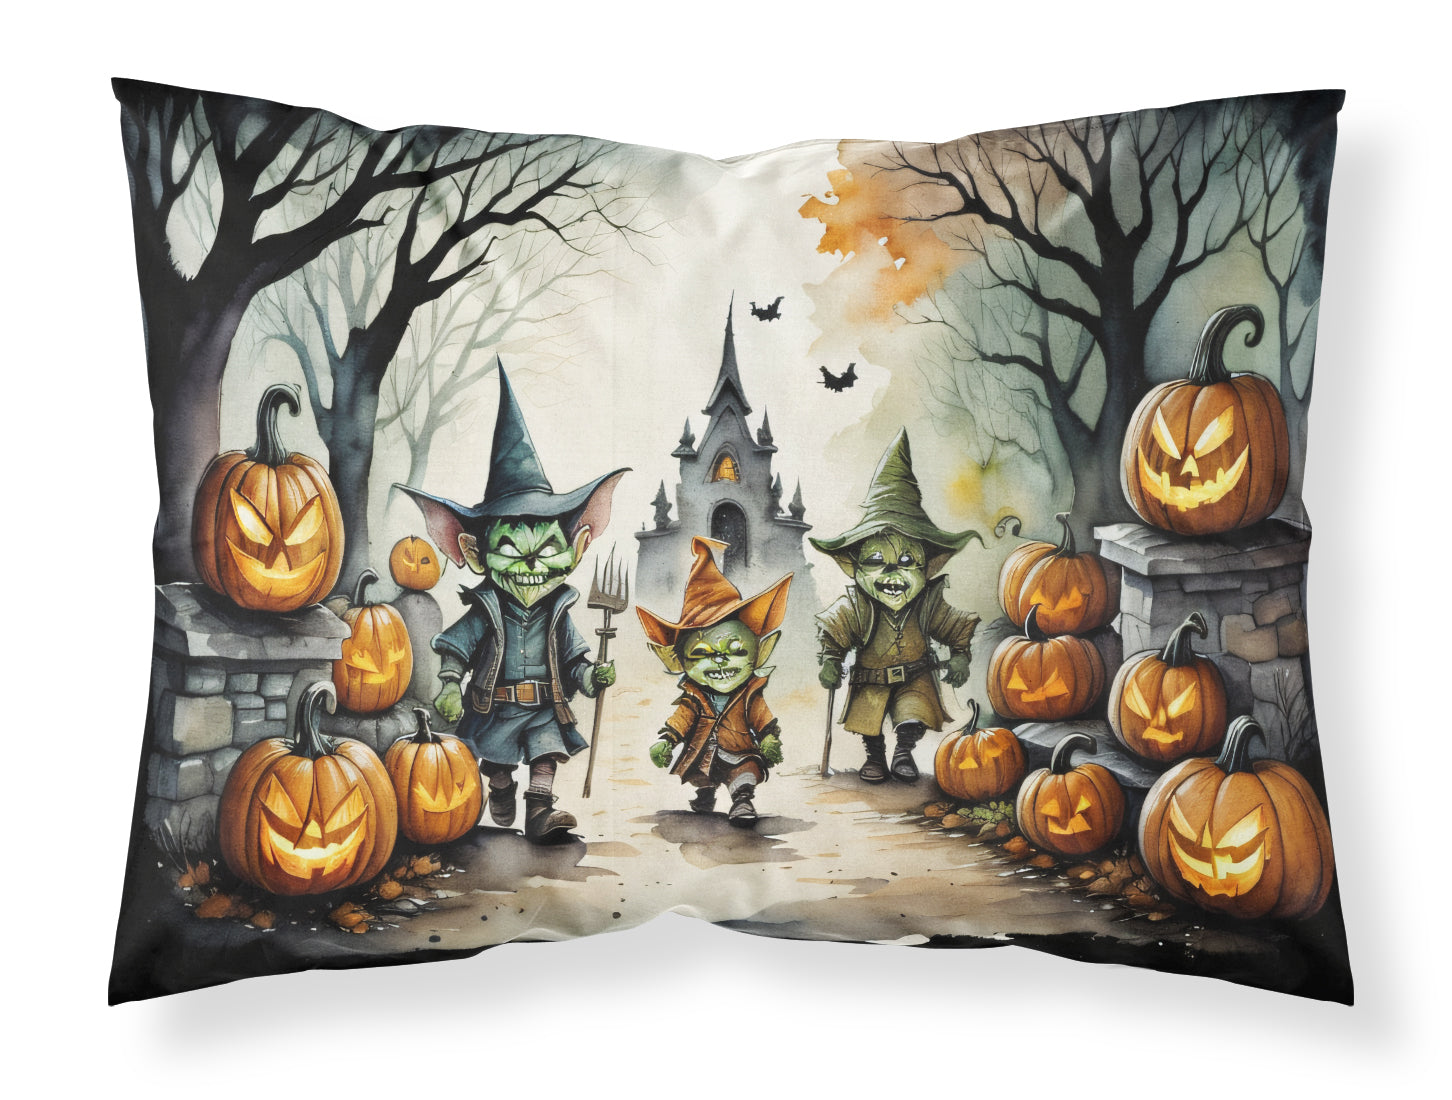 Buy this Goblins Spooky Halloween Fabric Standard Pillowcase